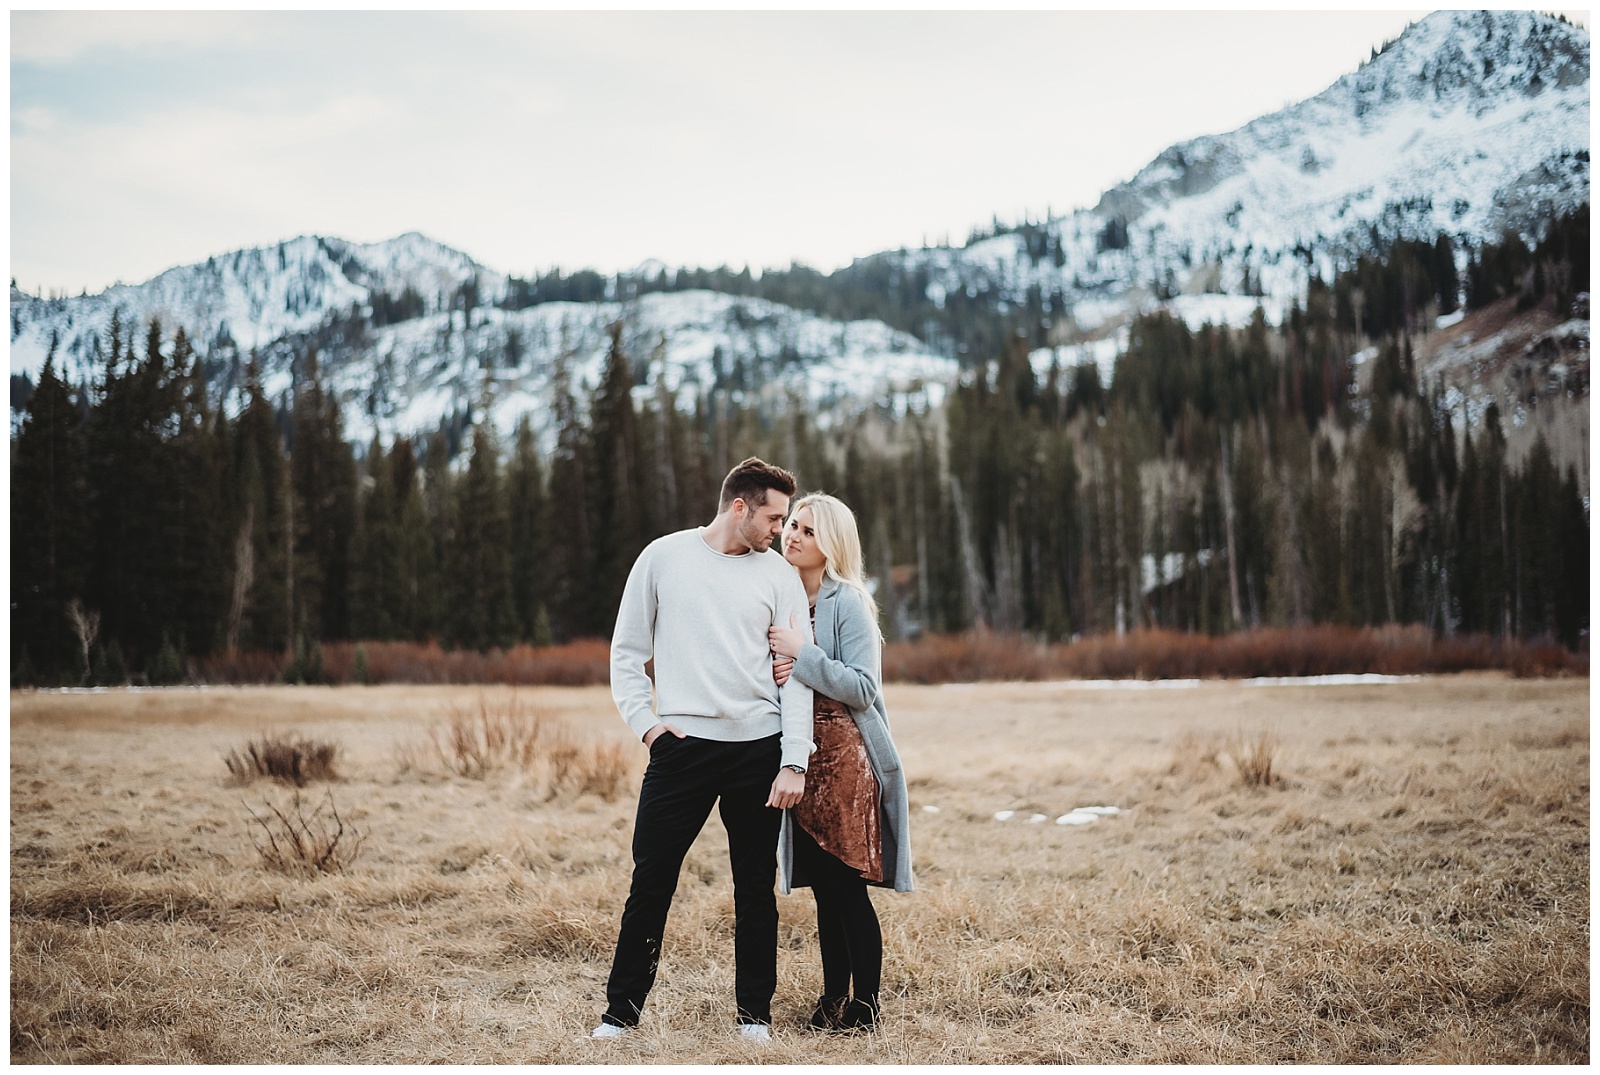 Engagement session at Big Cottonwood Canyon, Salt Lake City, Utah by Dallas TX based wedding photographer